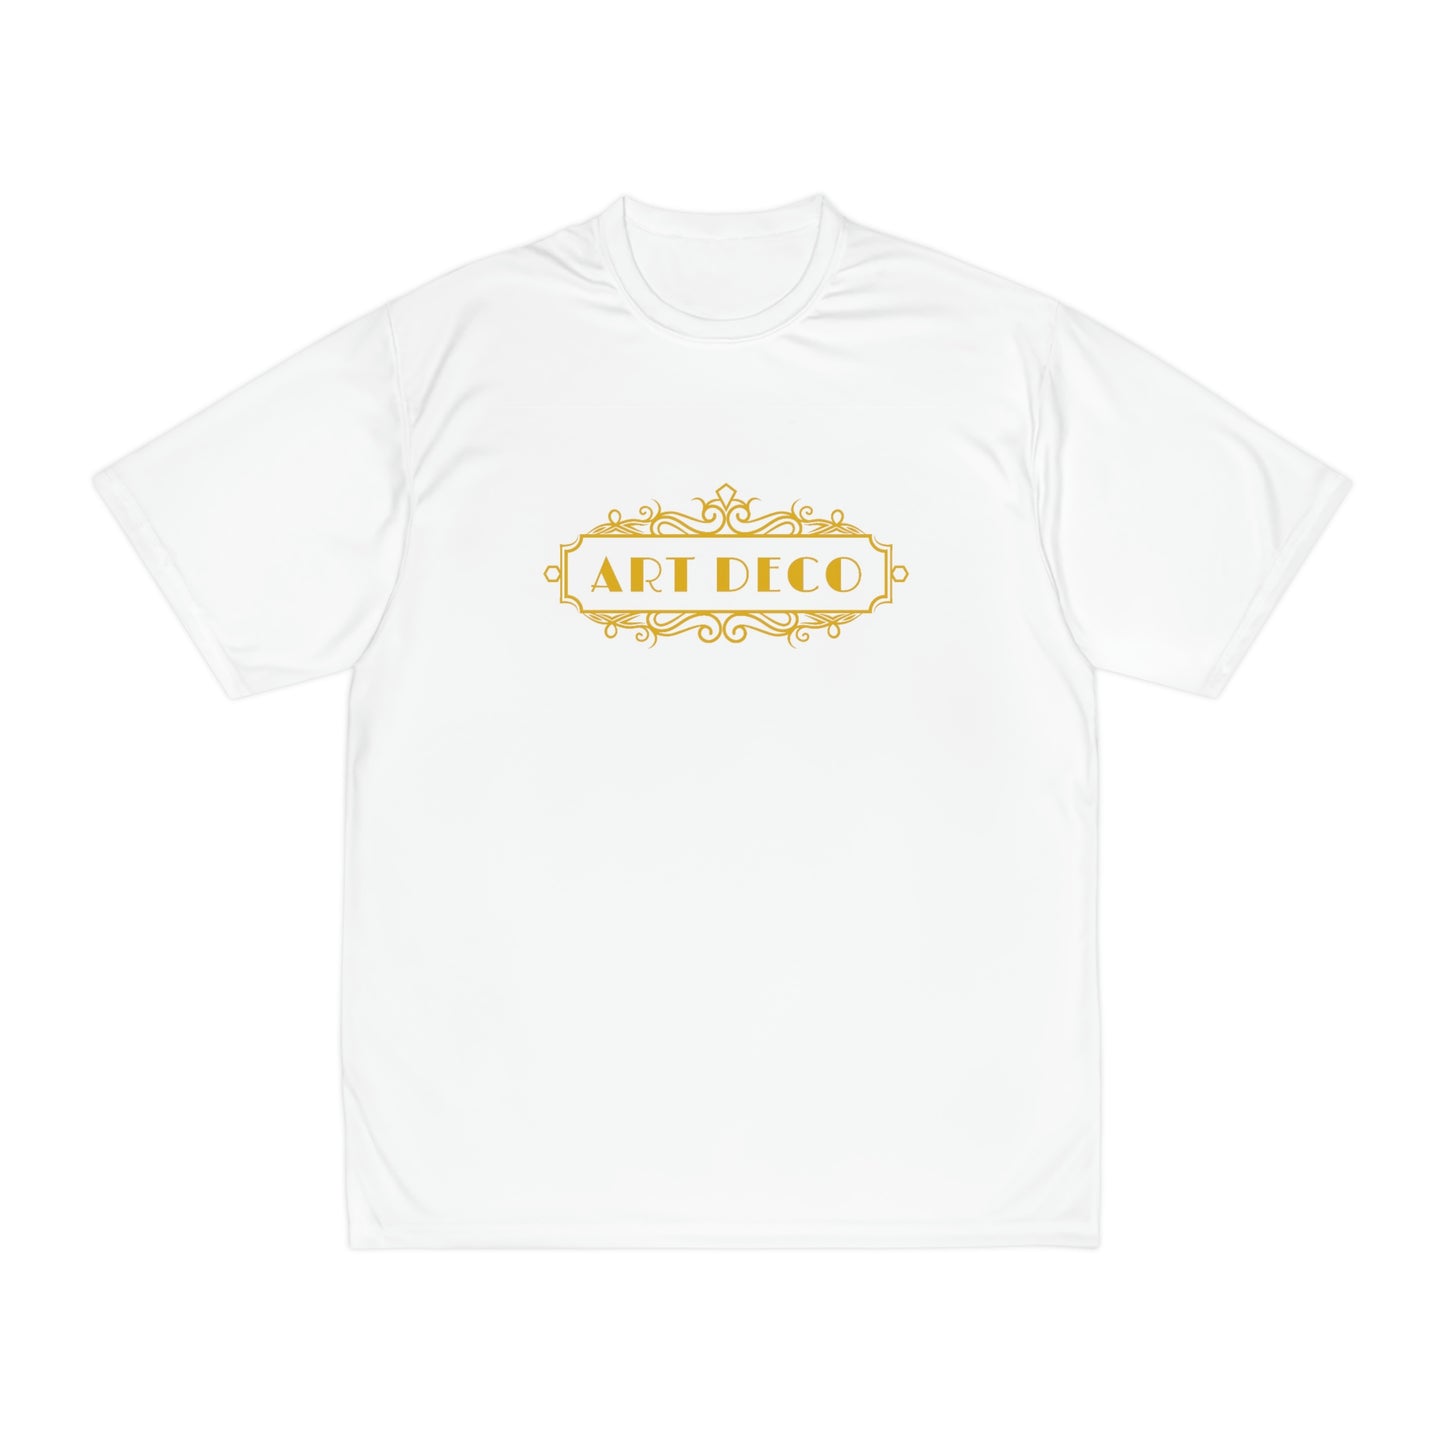 ART DECO - Men's Performance T-Shirt